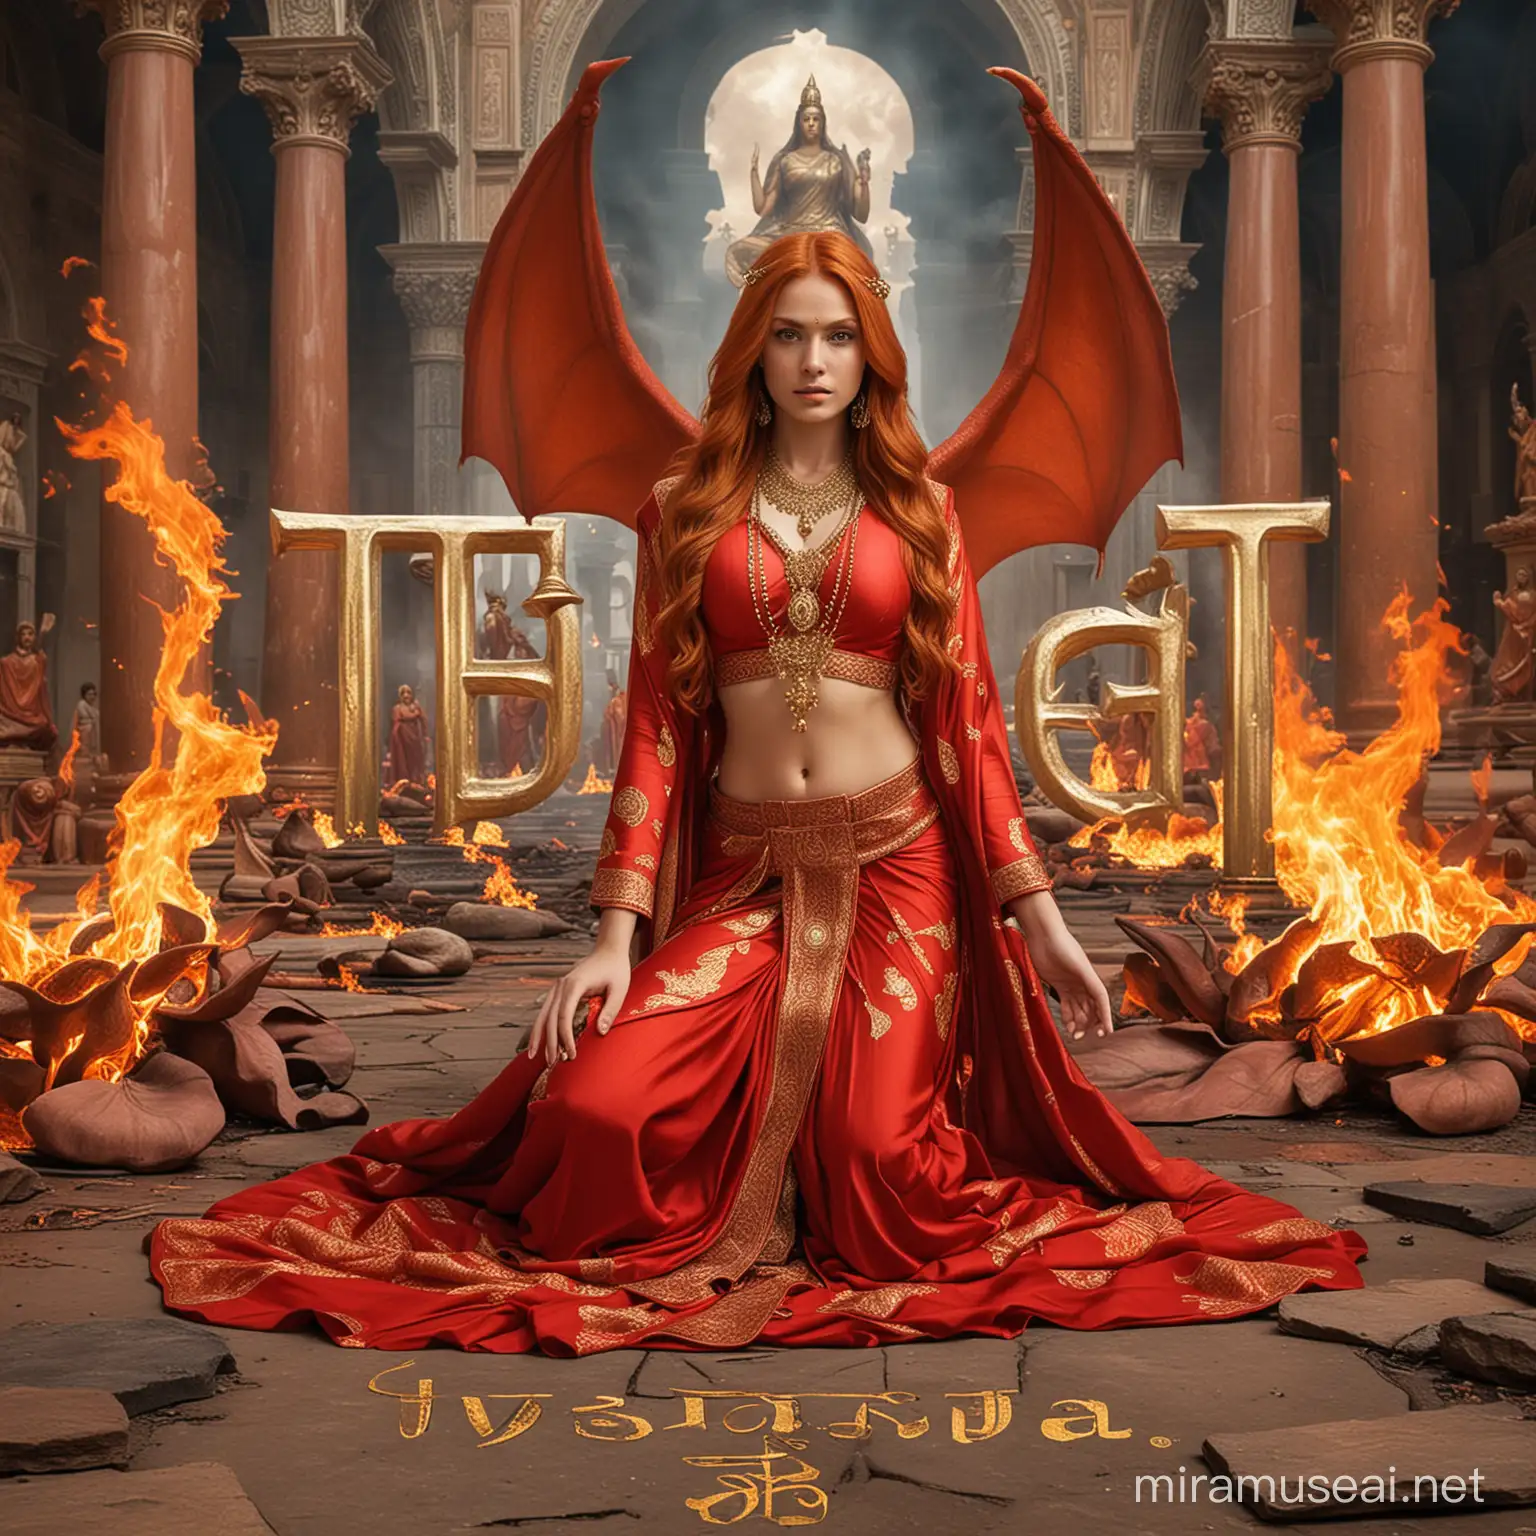 Empress Goddess Vishnu Karma Powerful Hindu Deity Surrounded by Fire and Dragons